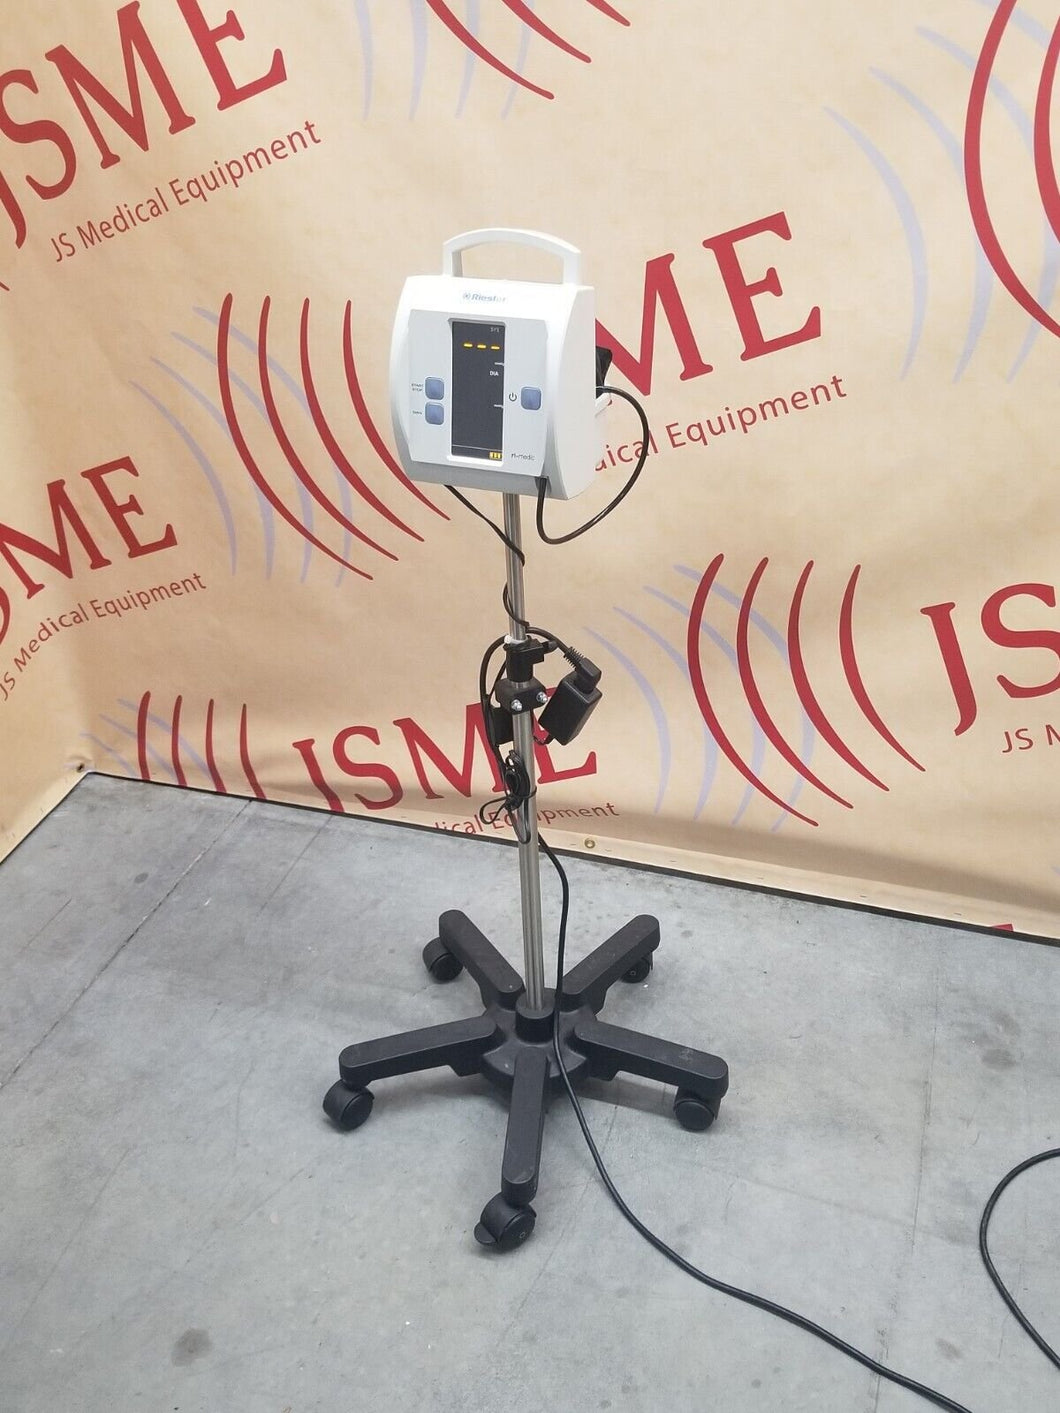 Riester Ri-Medic Blood Pressure Monitor on Cart